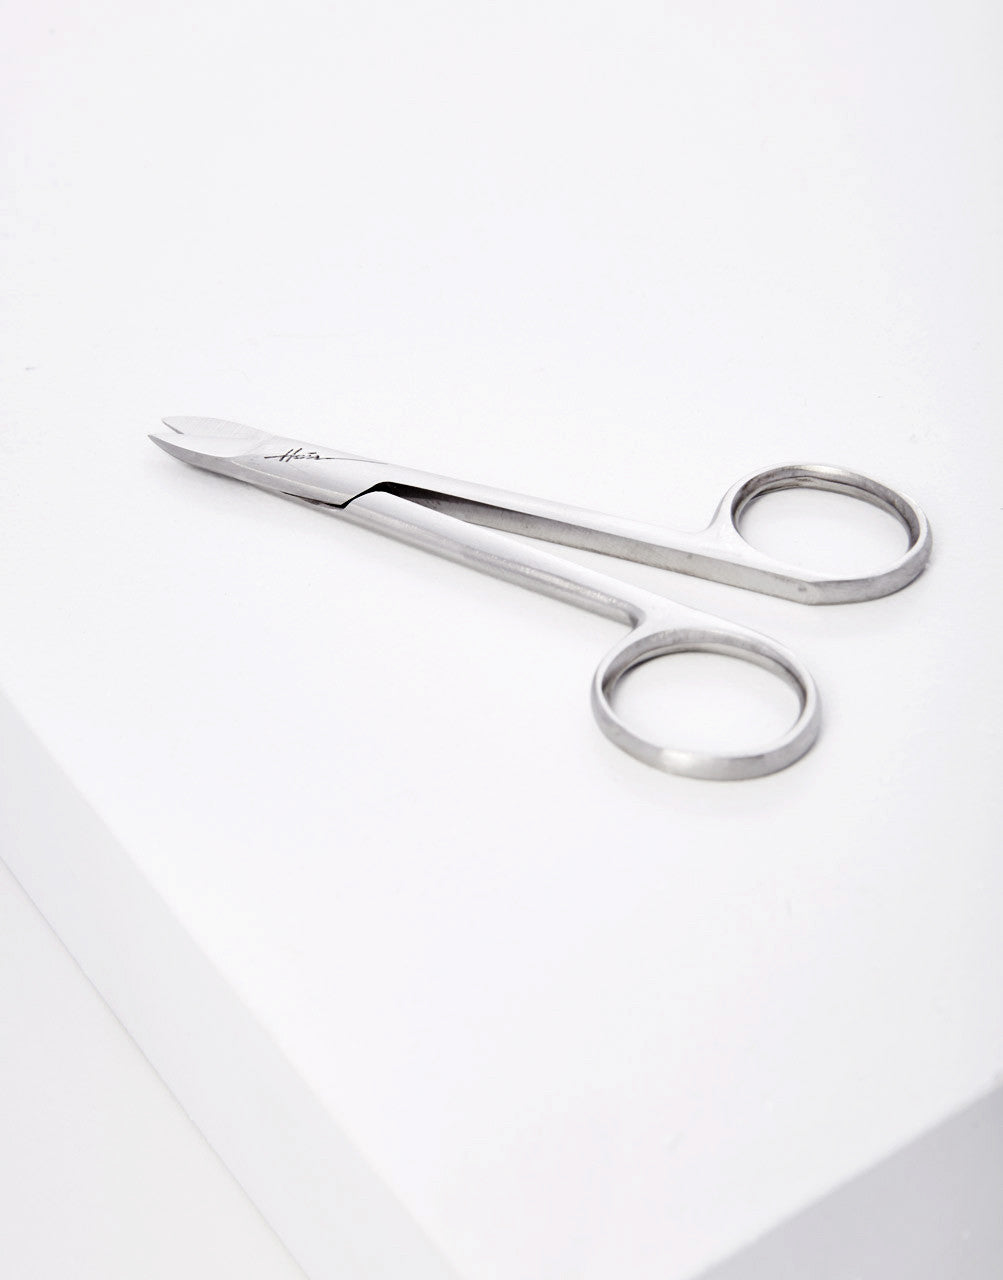 Tip Cut Scissors